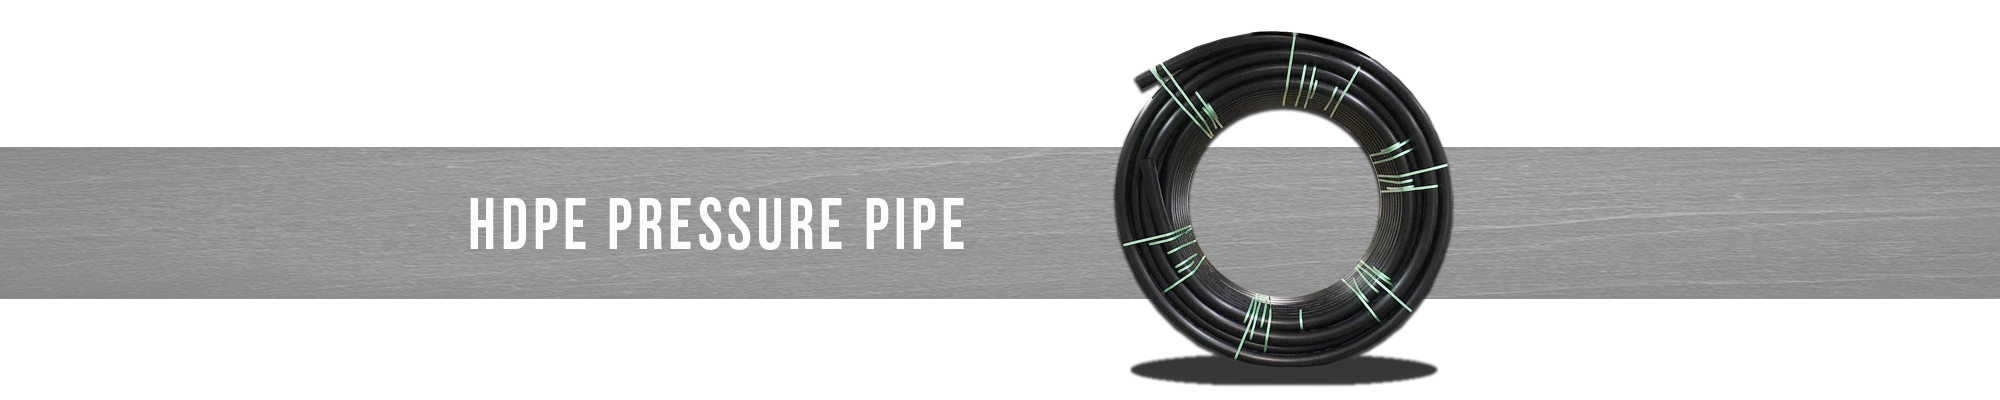 HDPE Pressure Pipe